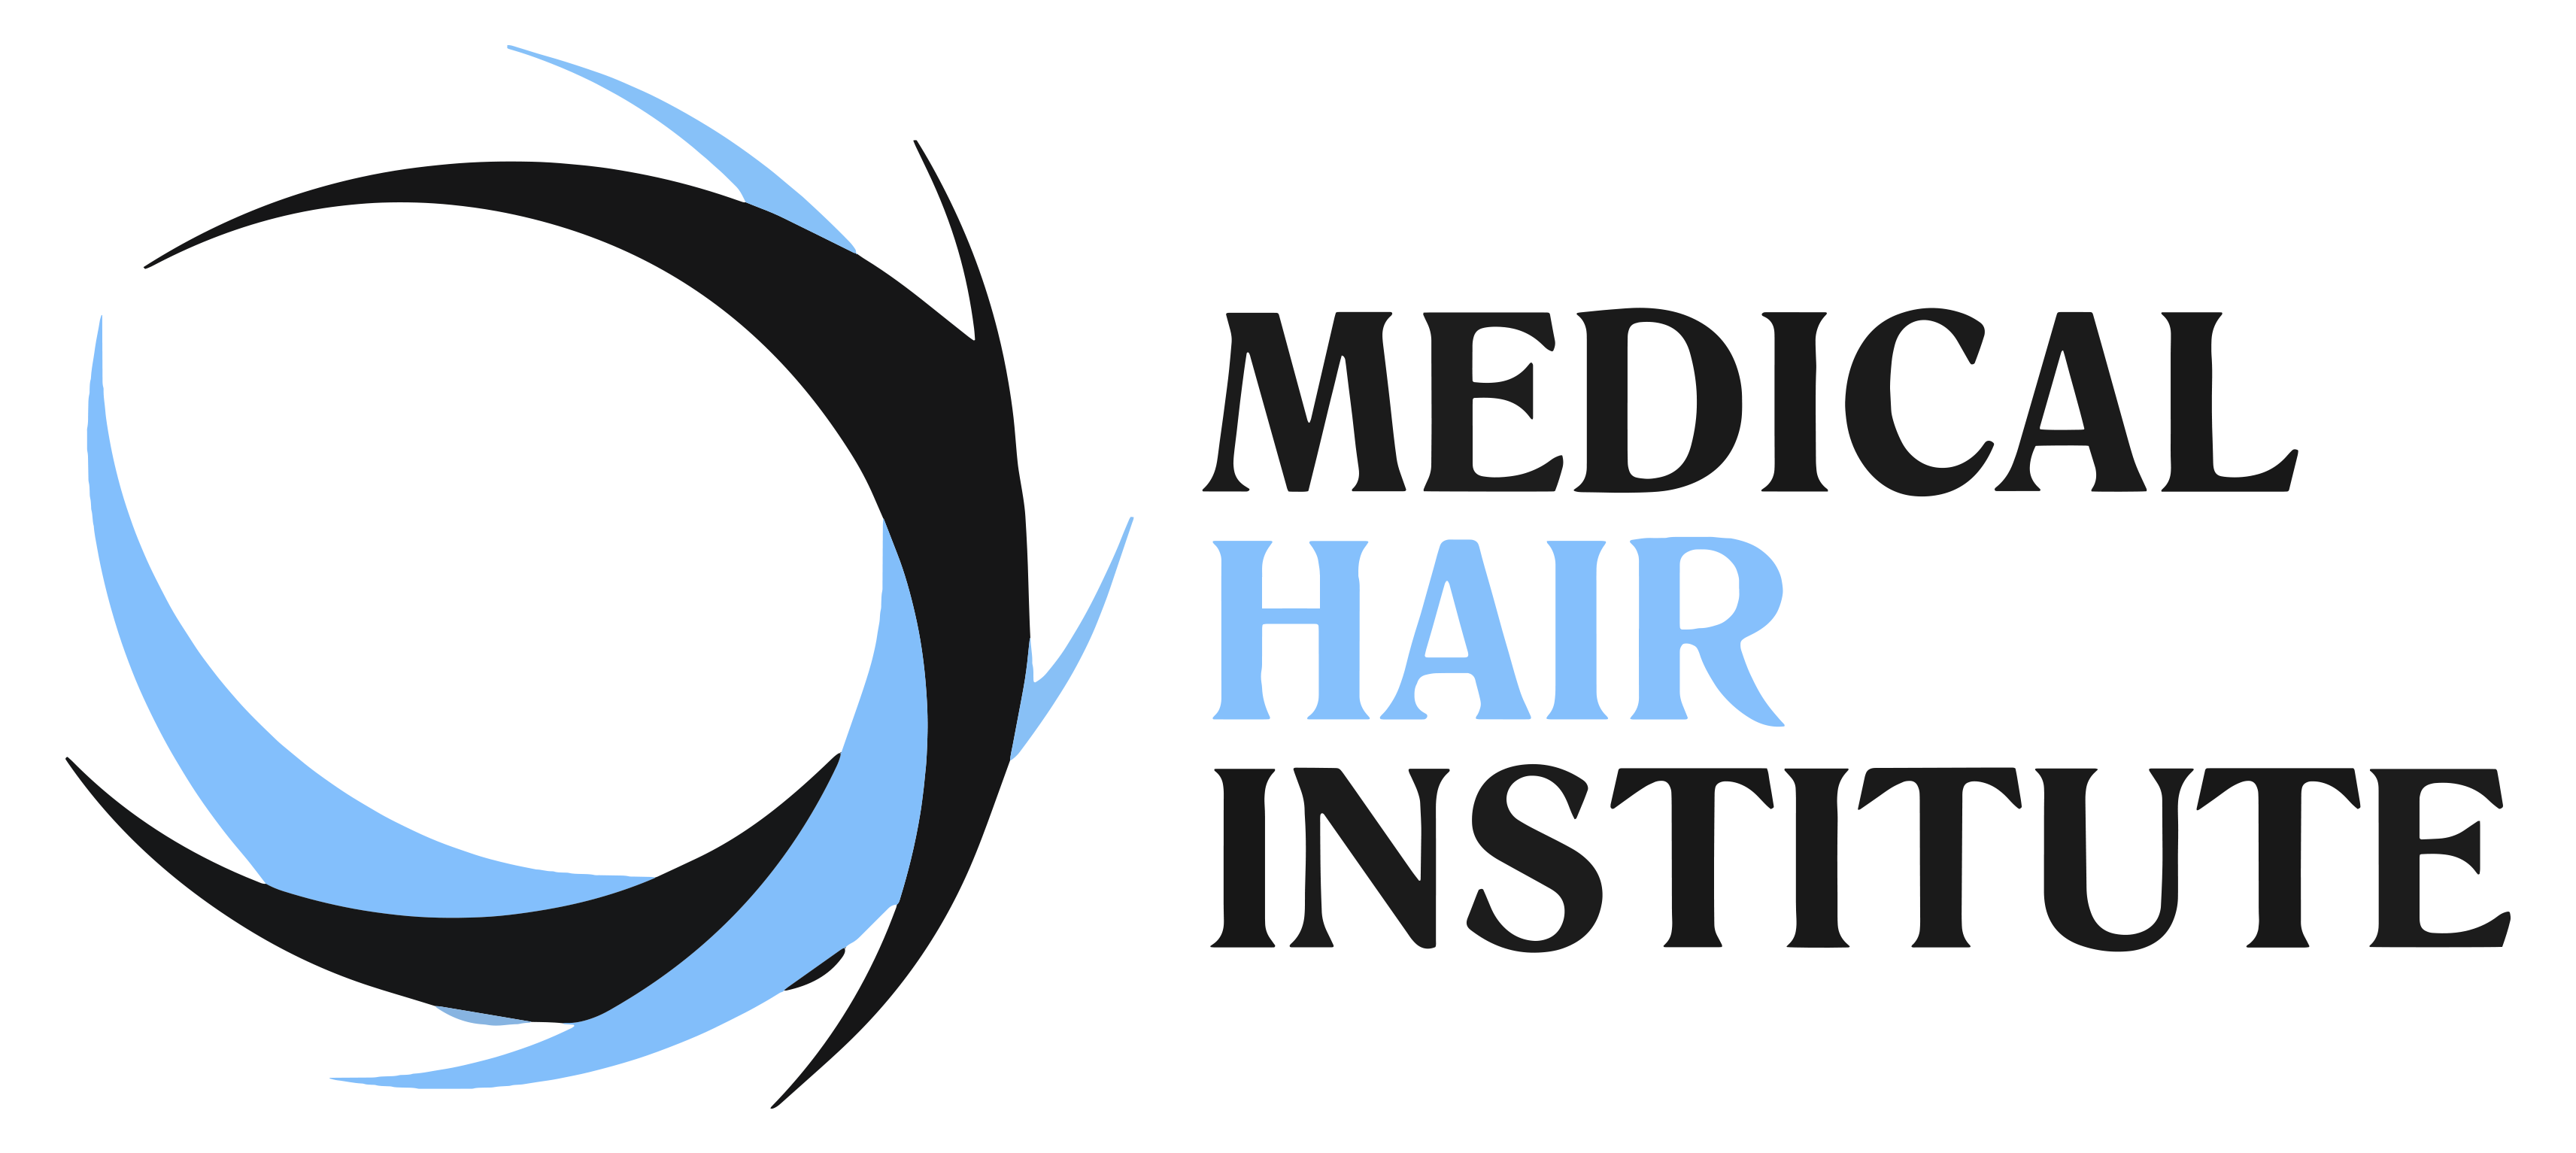 Medical Hair Institute - Logo